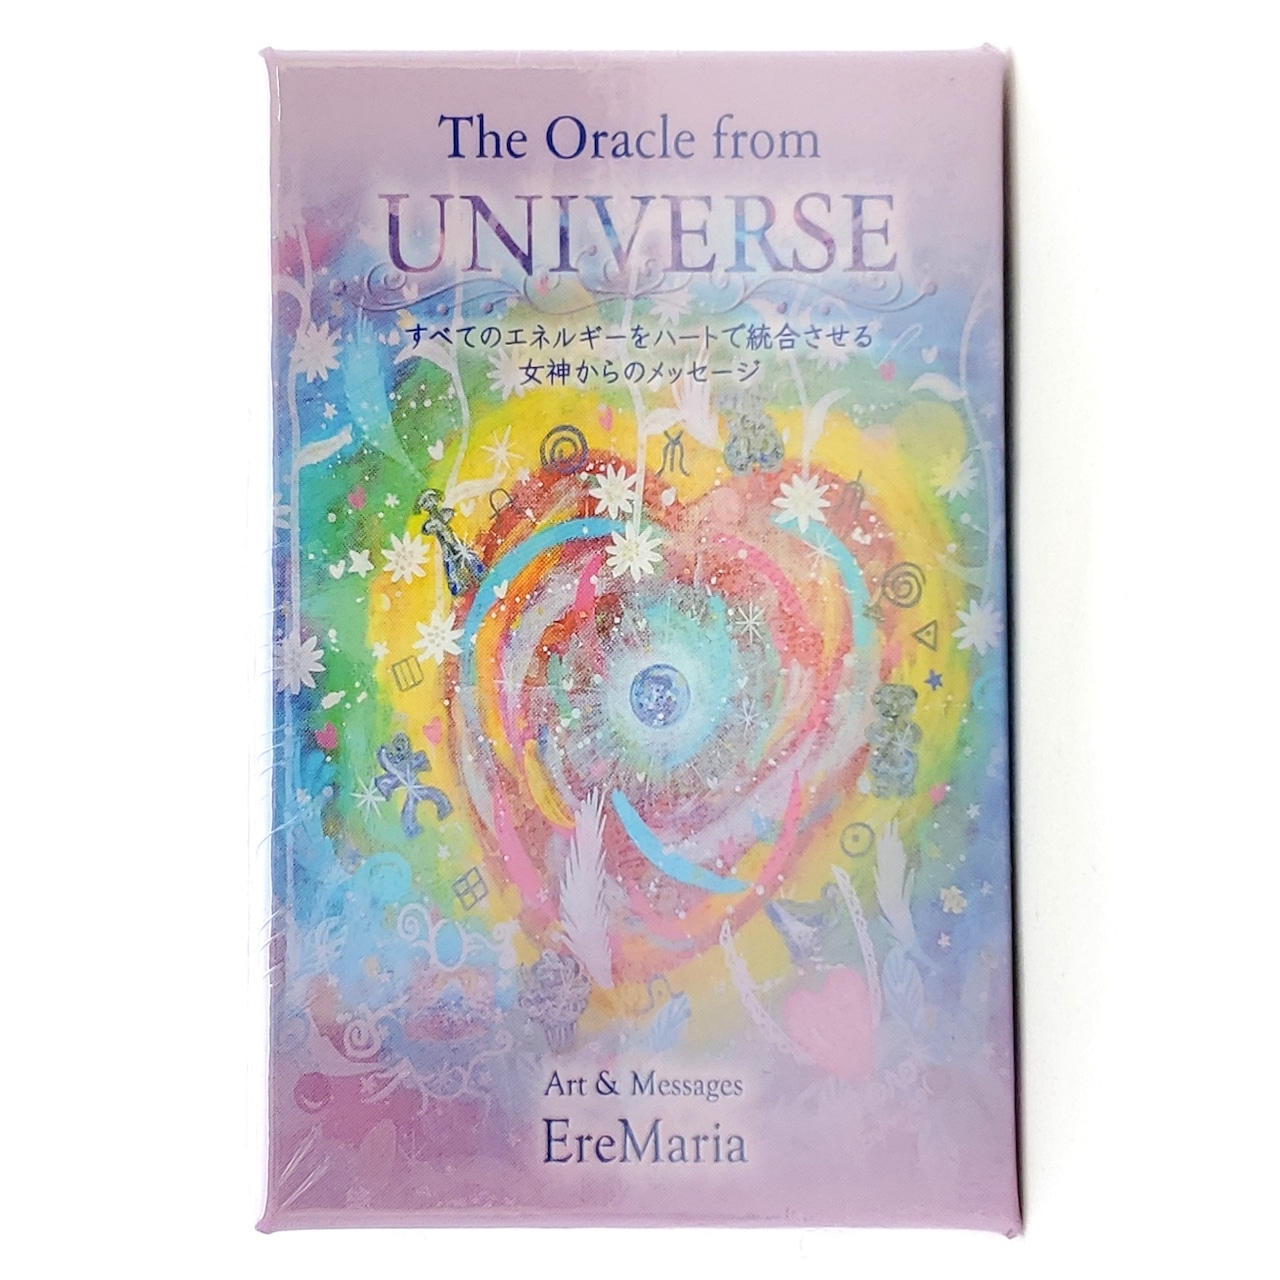 The Oracle from UNIVERSE〜ユニバーサルオラクルカード〜